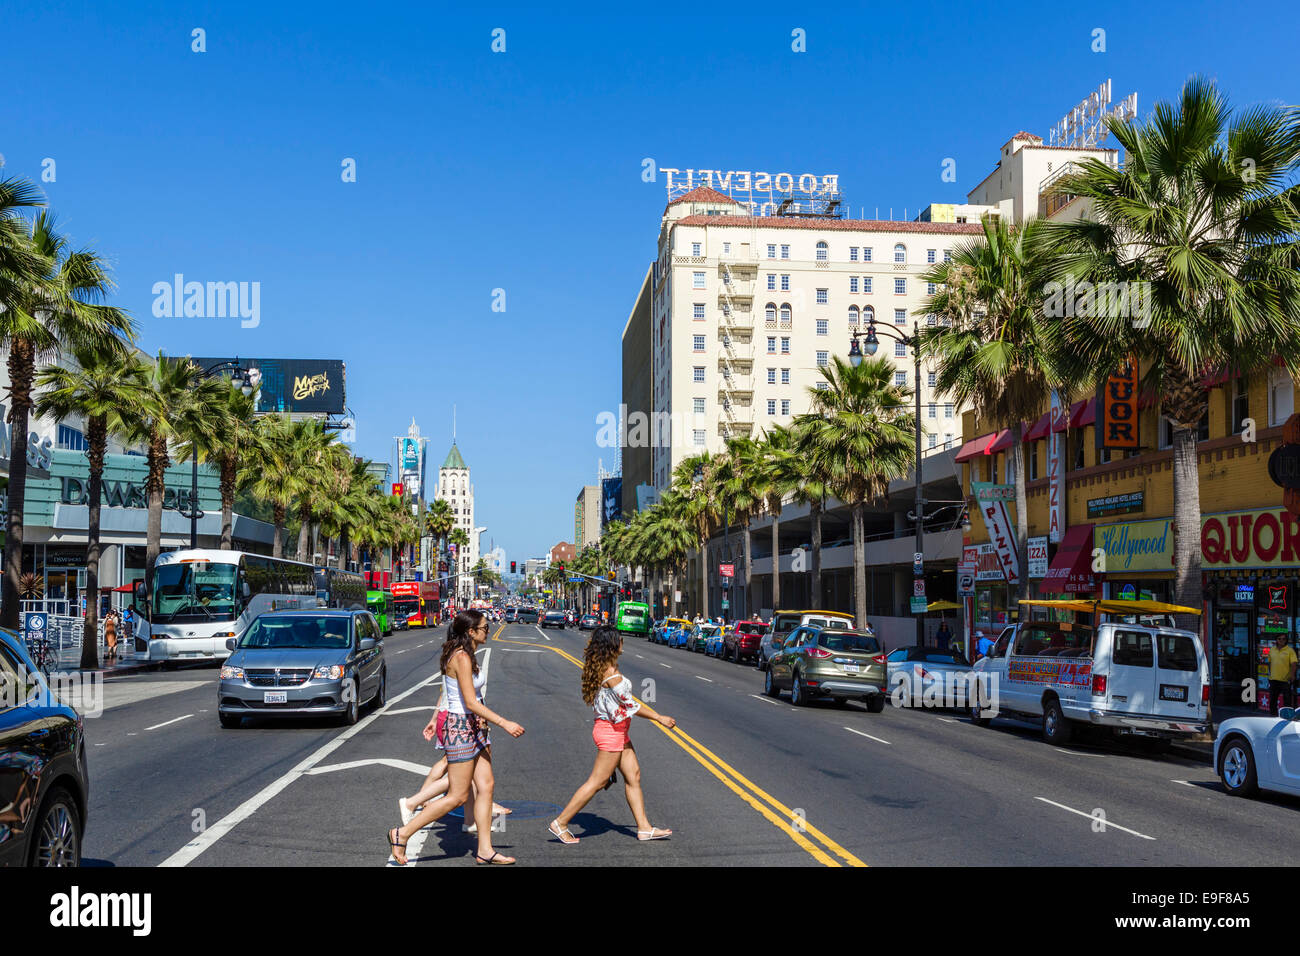 Hollywood Boulevard looking towards the Roosevelt Hotel, Hollywood, Los Angeles, California, USA Stock Photo